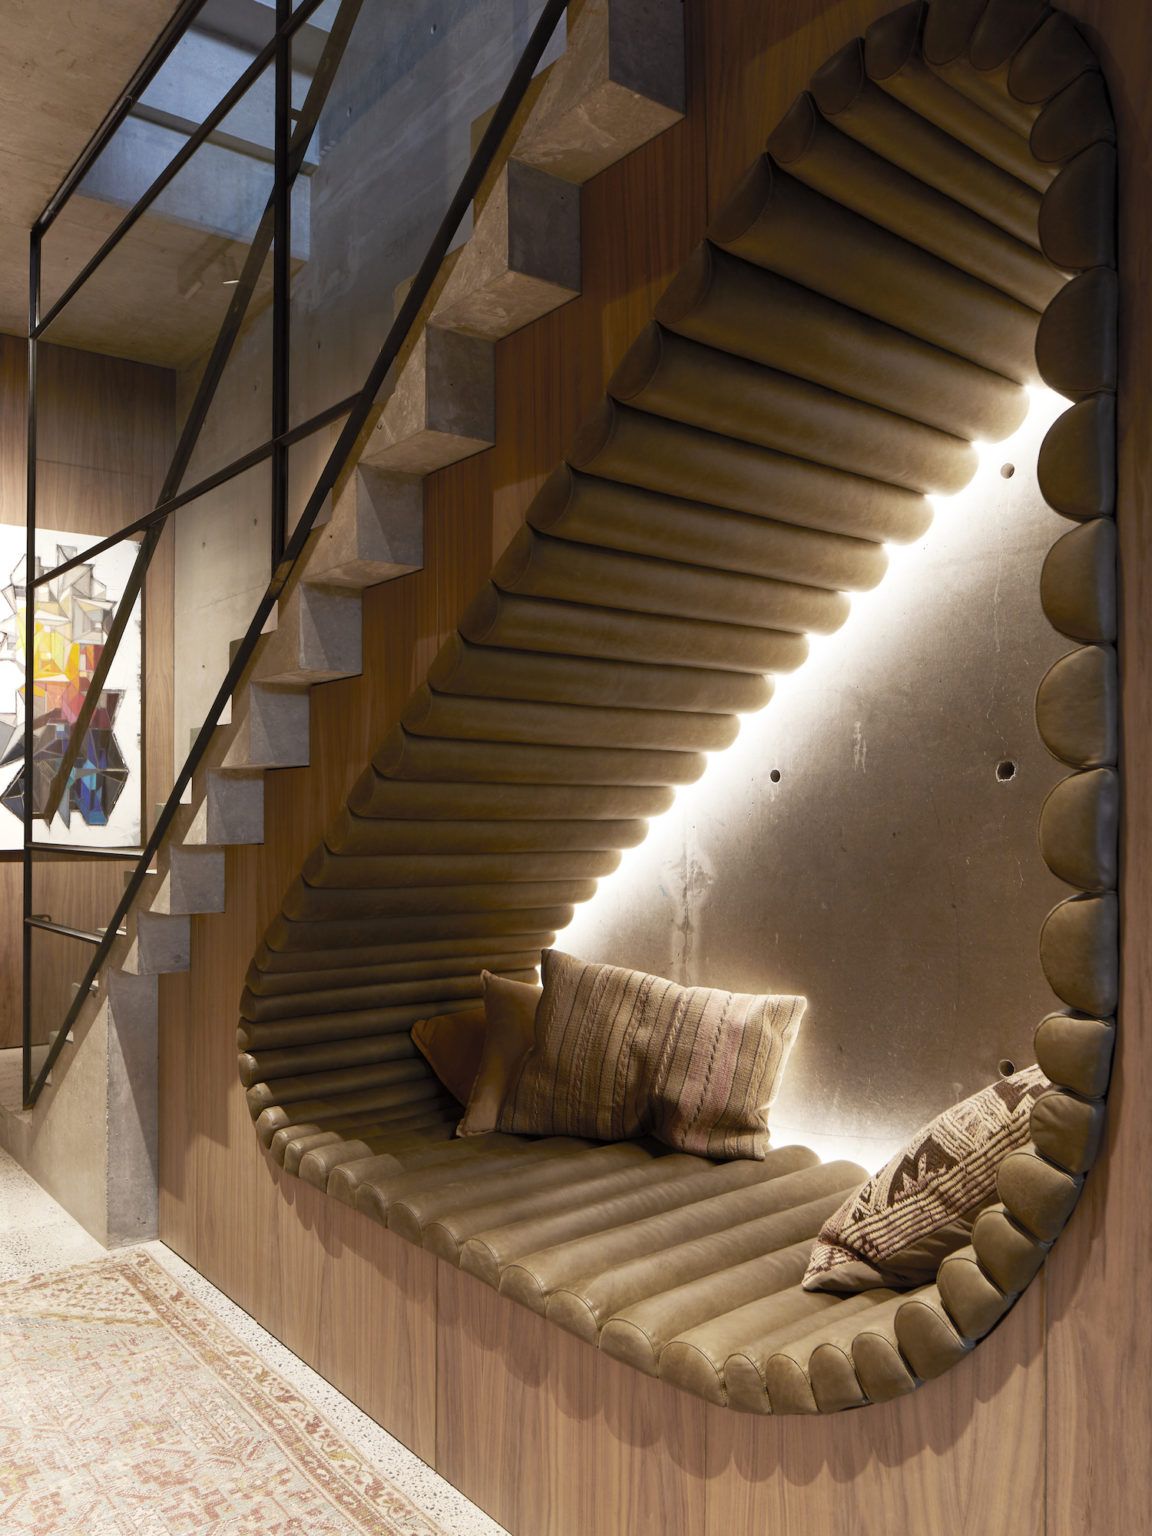 Creative Interior Design Ideas for a Cozy
Home